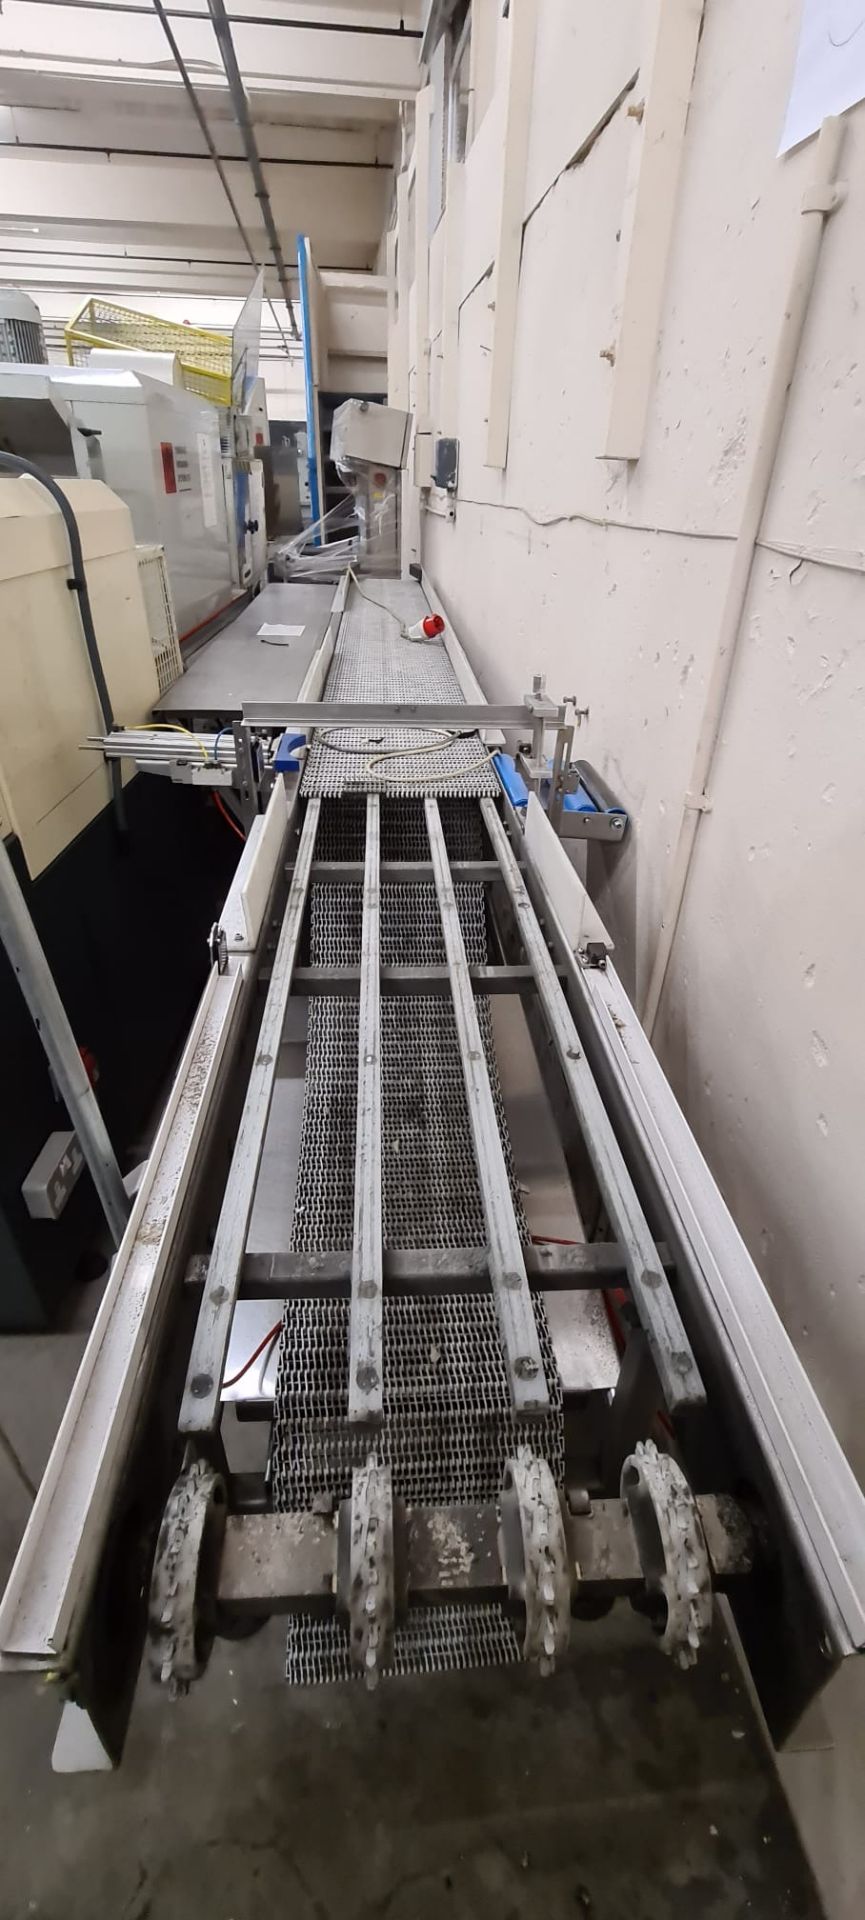 Plastic Slat Conveyor, 400w x 4500l, buyers responsibility to load, lot located Bradford, vendors